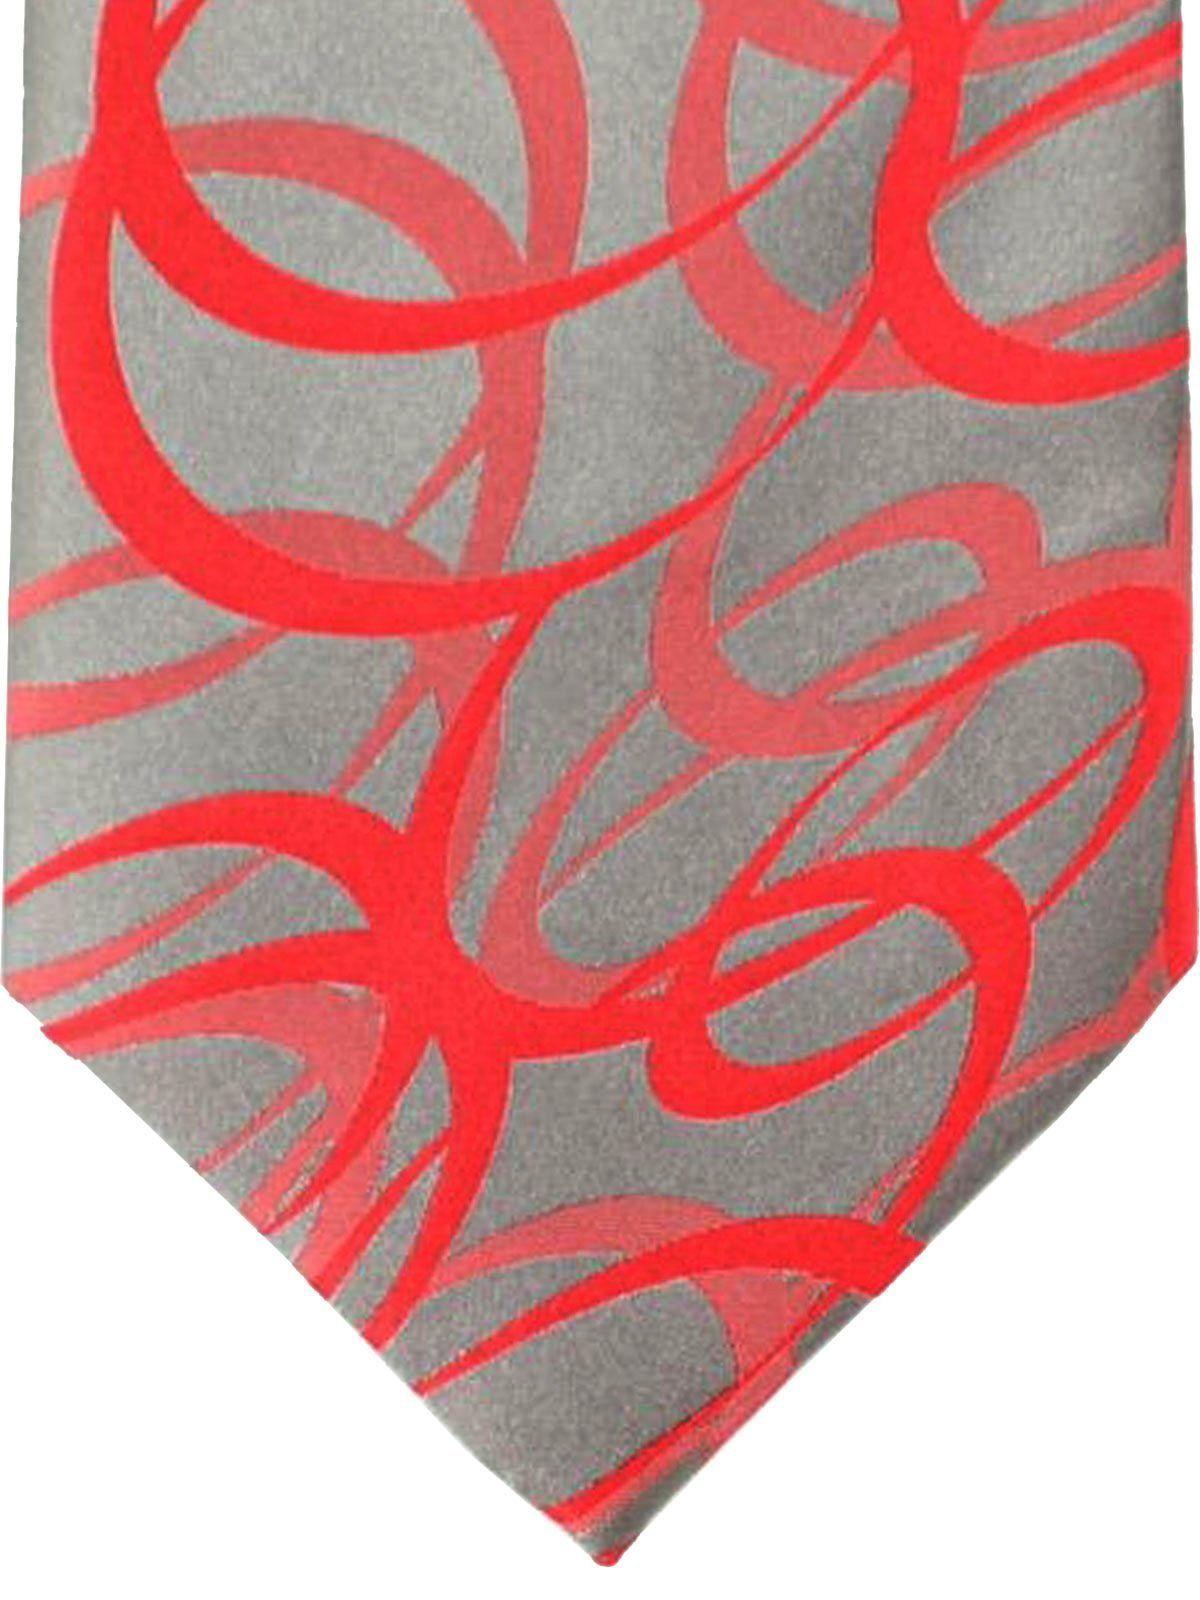 Gray and Red Swirl Logo - Zilli Tie Gray Red Swirl Design - Wide Necktie - Tie Deals